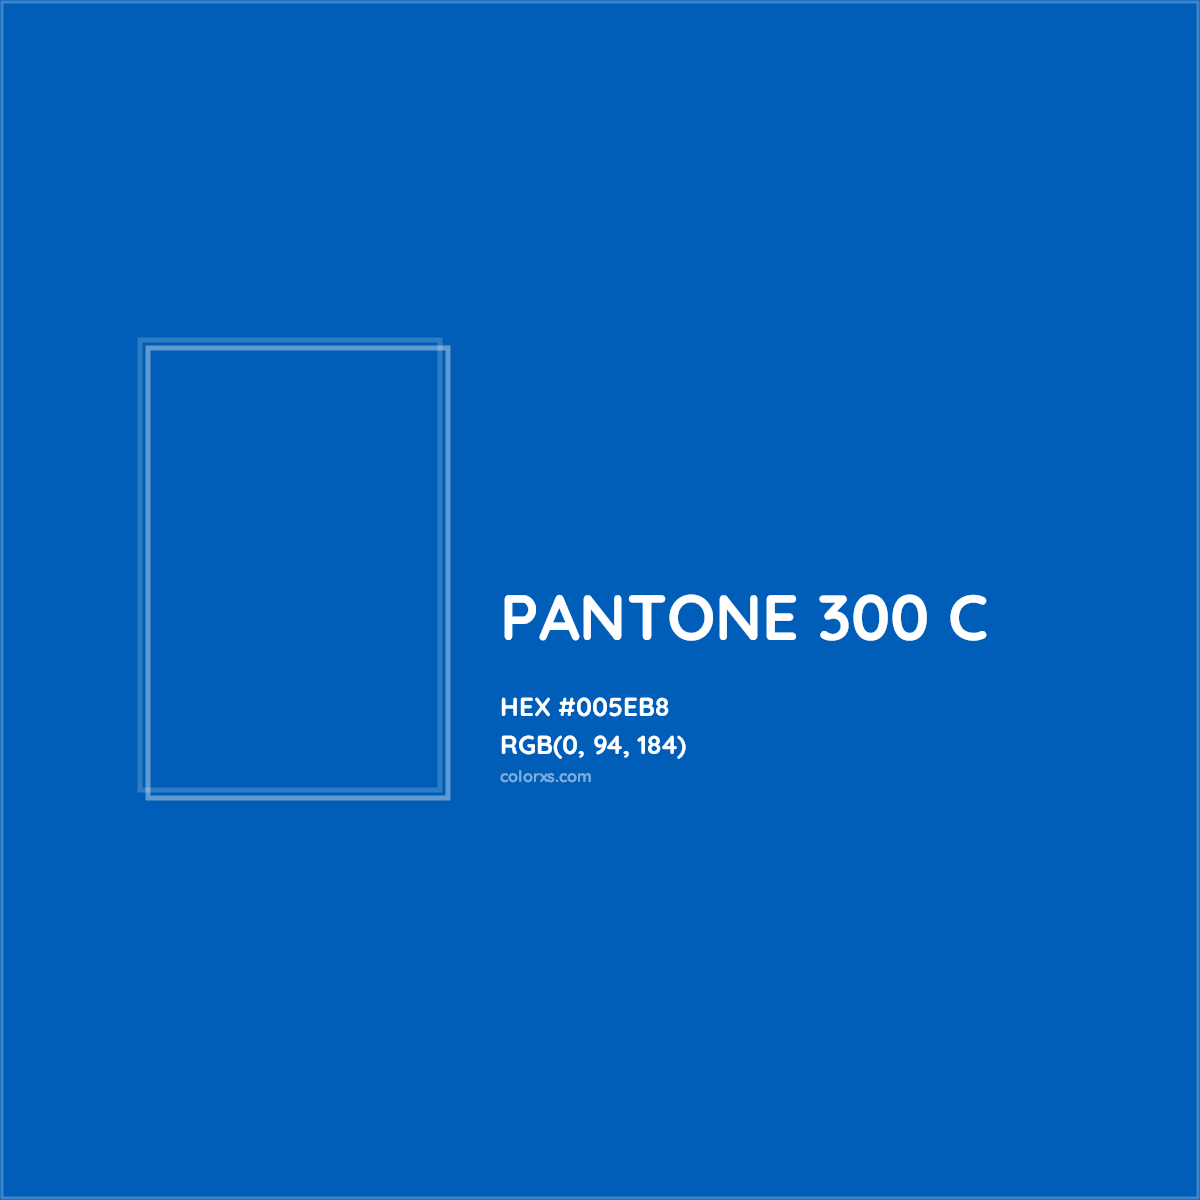 HEX #005EB8 PANTONE 300 C CMS Pantone PMS - Color Code